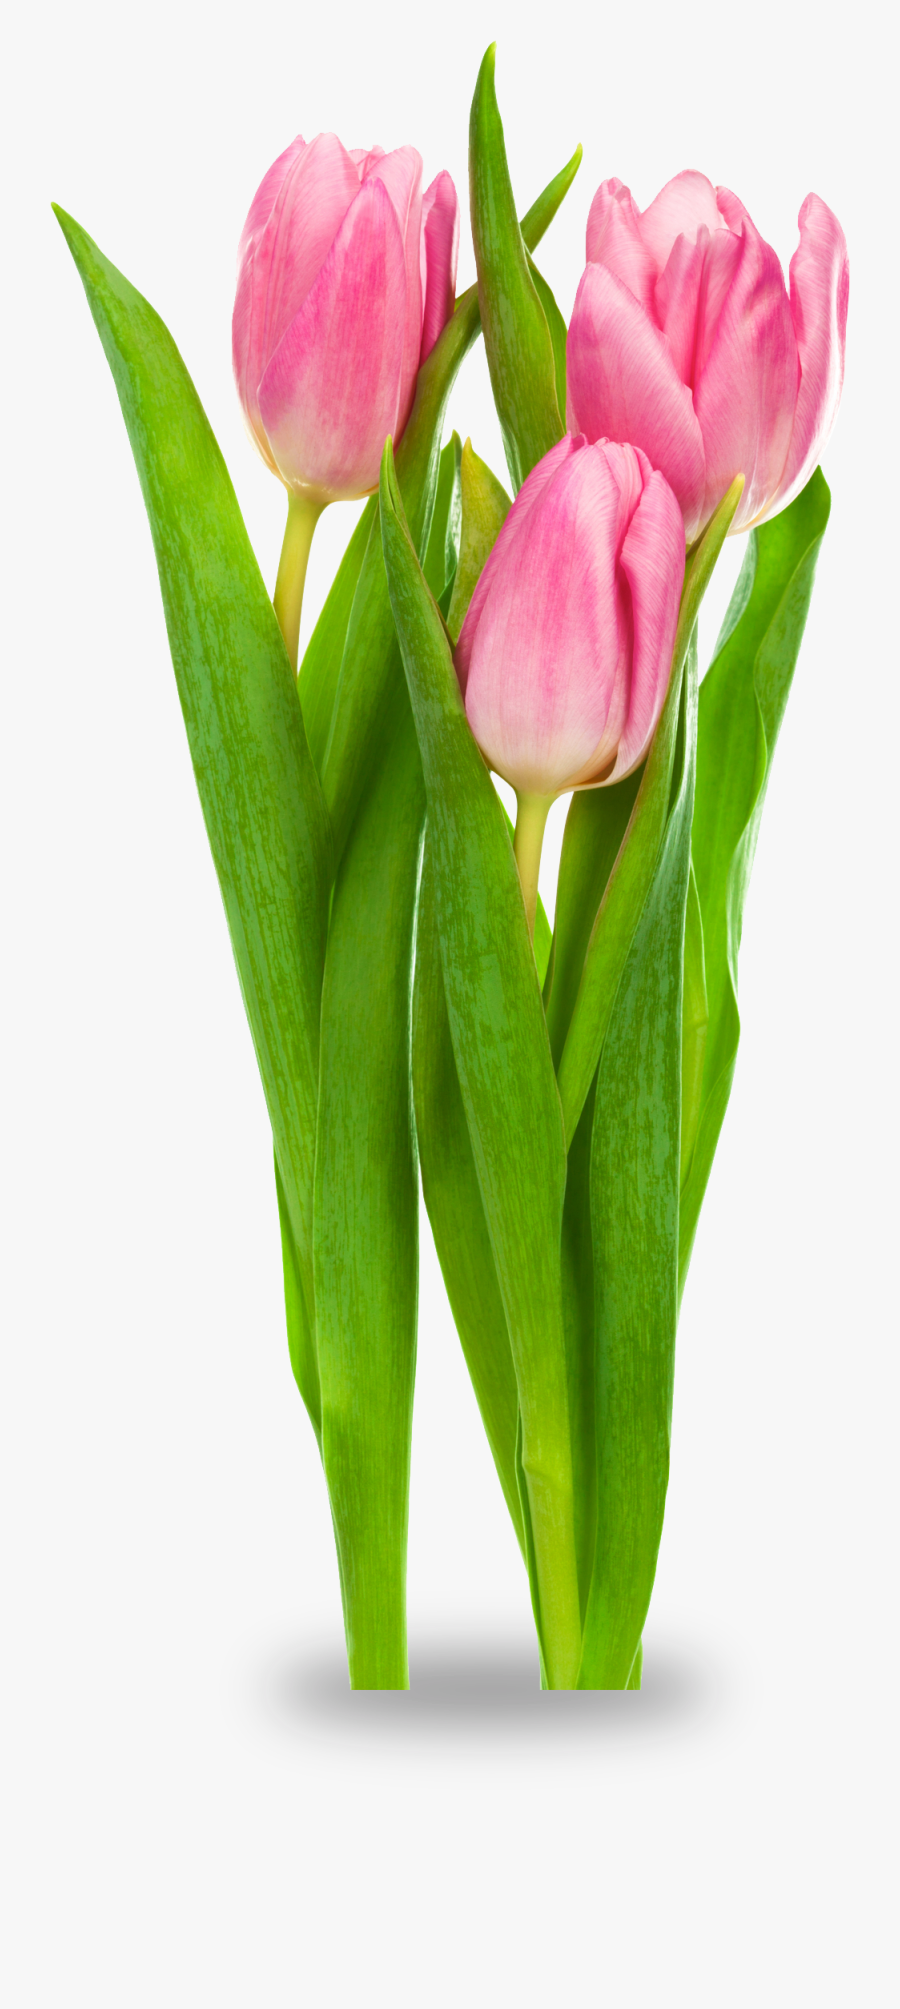 Indira Gandhi Memorial Tulip Garden Tulipa Gesneriana - Tulip Flower No Background, Transparent Clipart